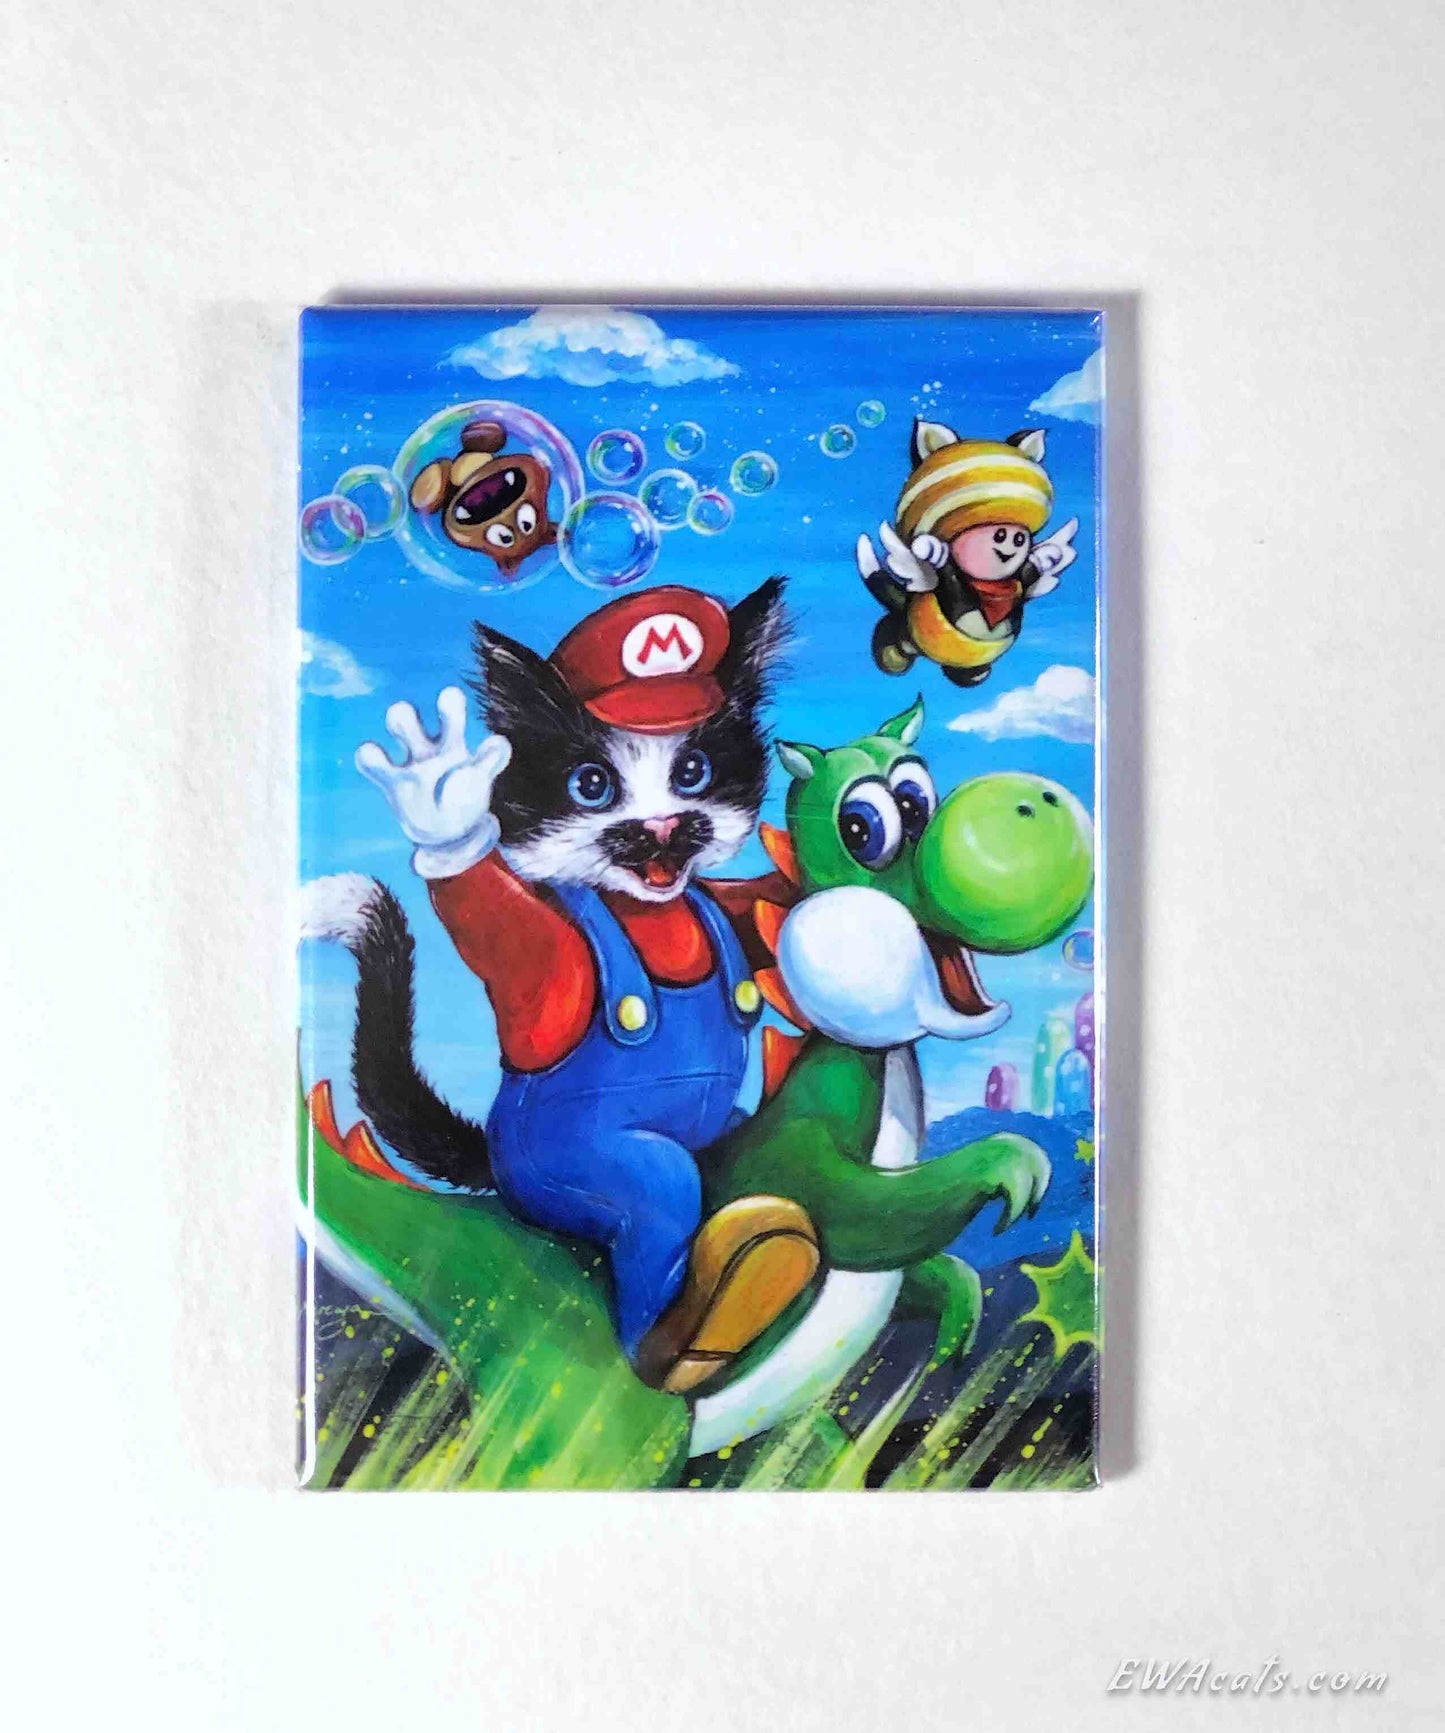 MAGNET 2"x 3" Rectangle "Mario Kitty"